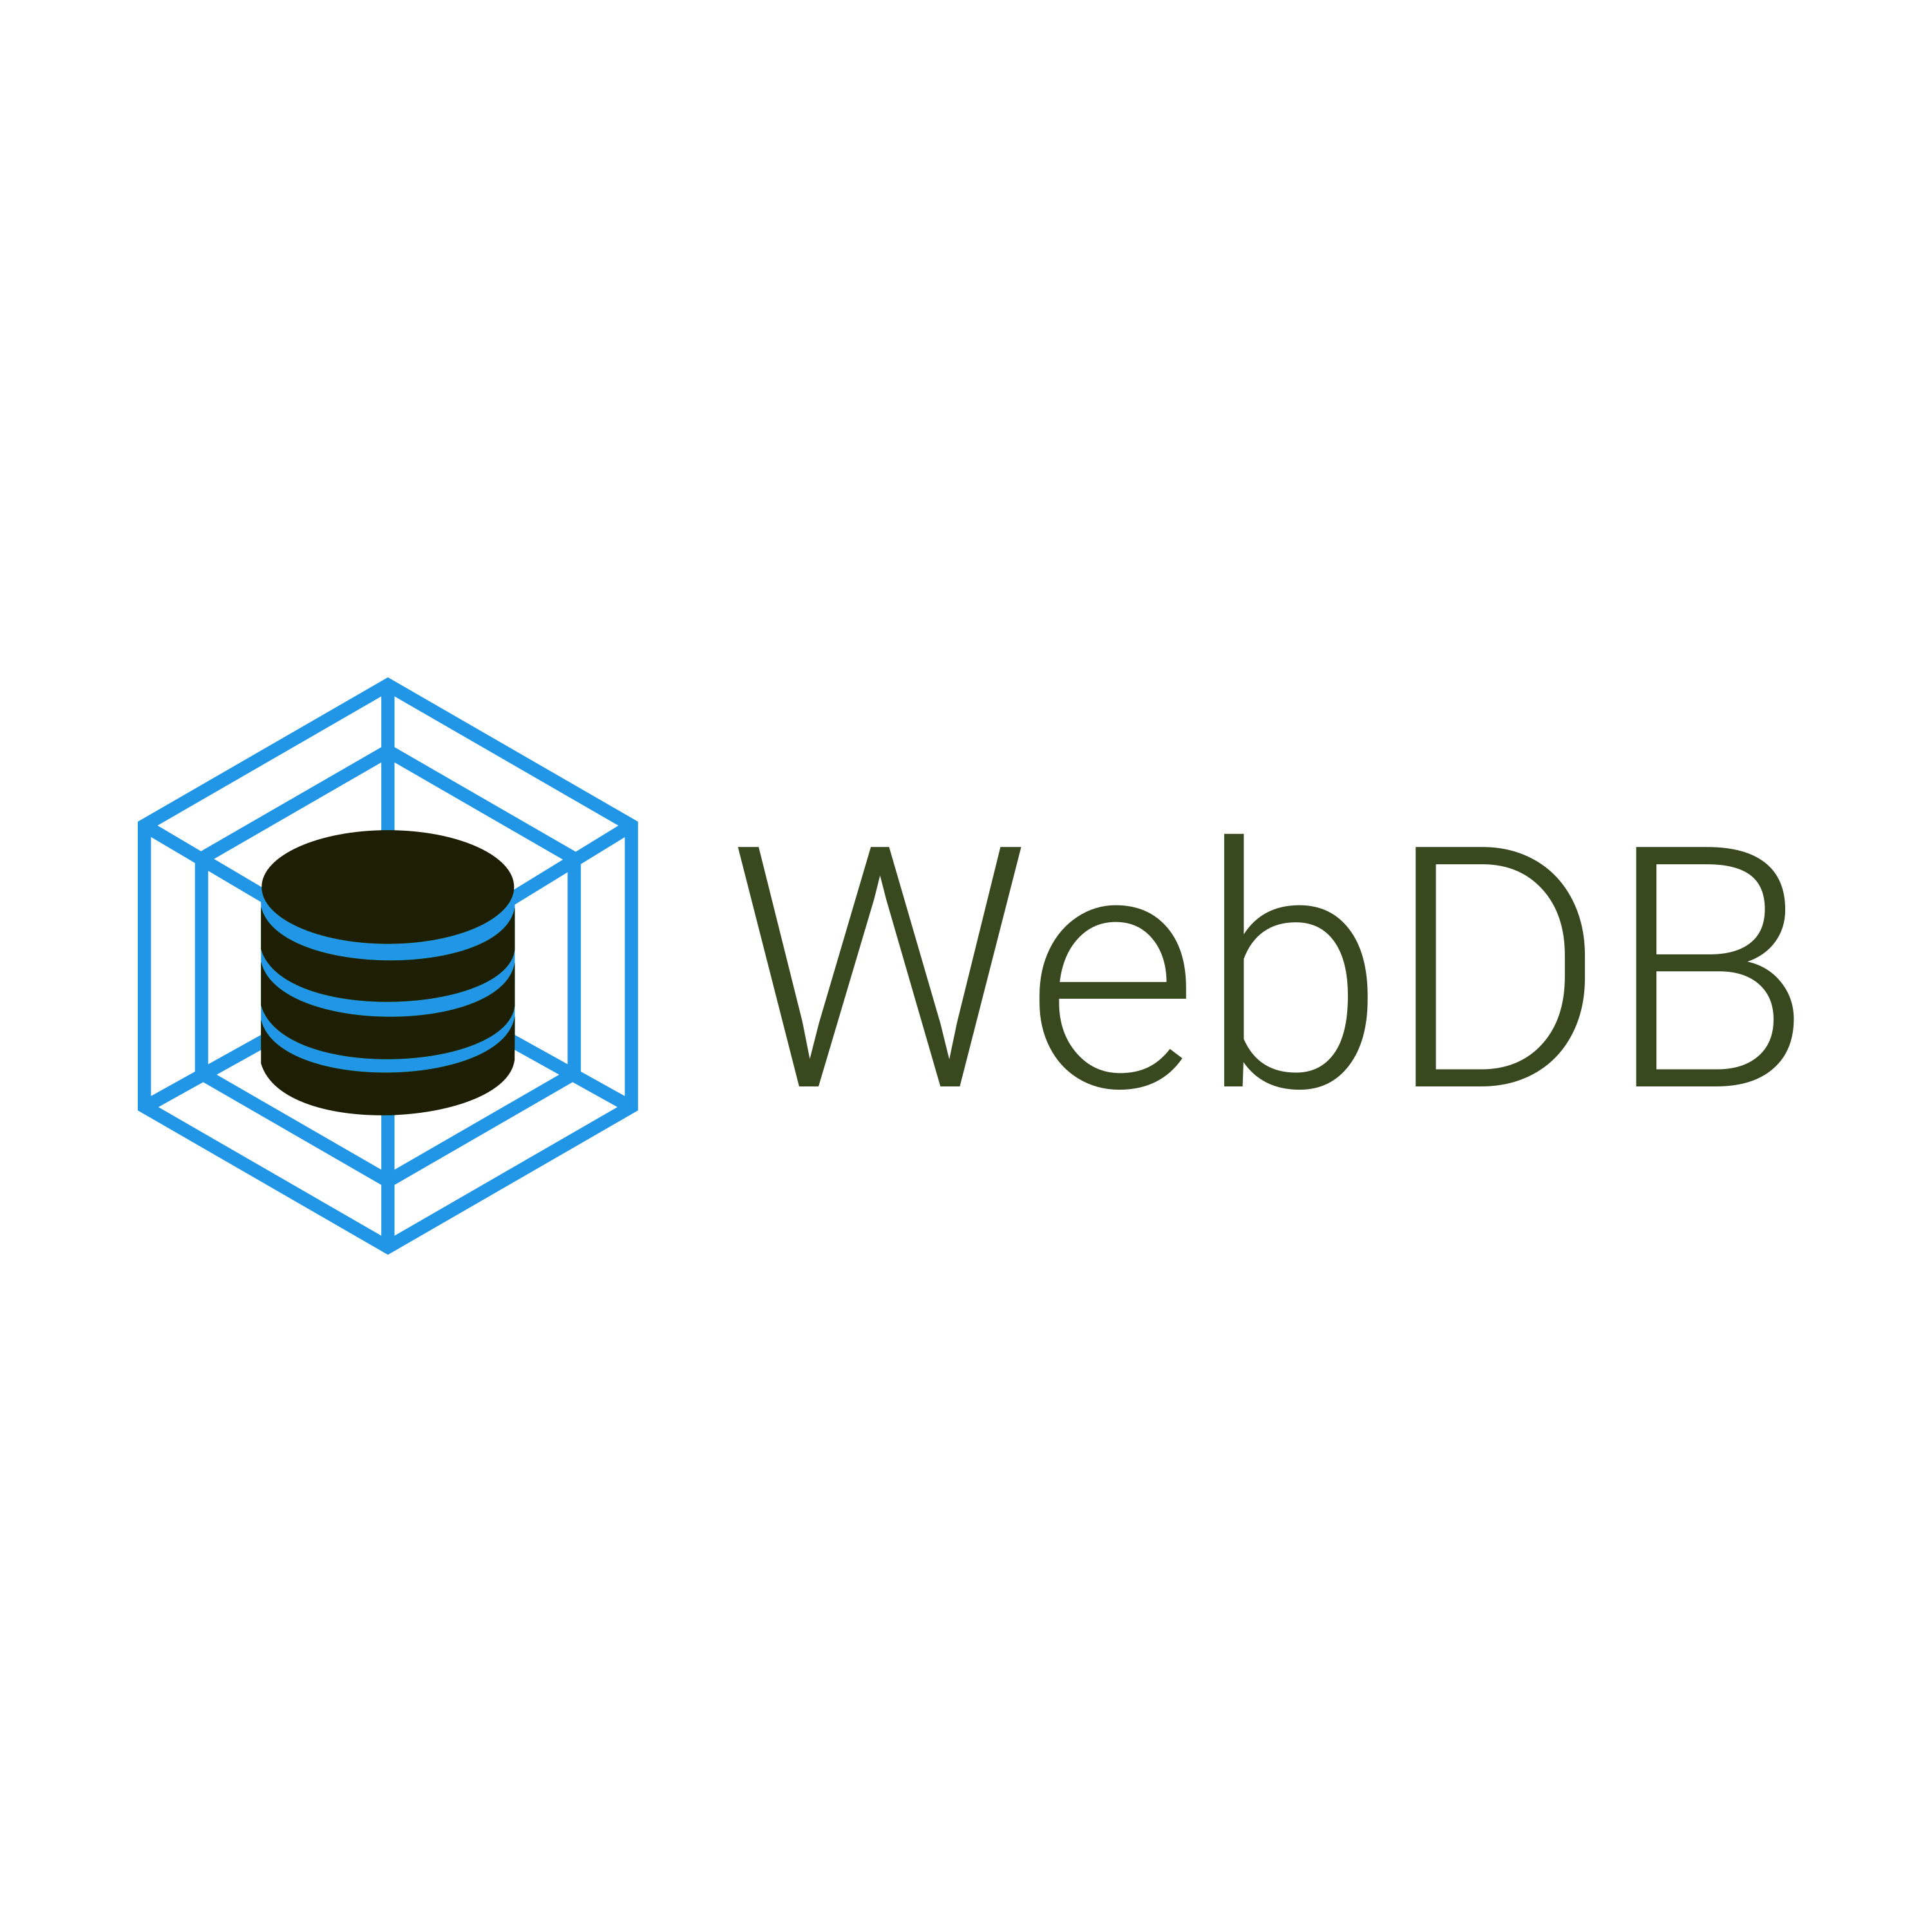 Webdb Logo Transparent Picture